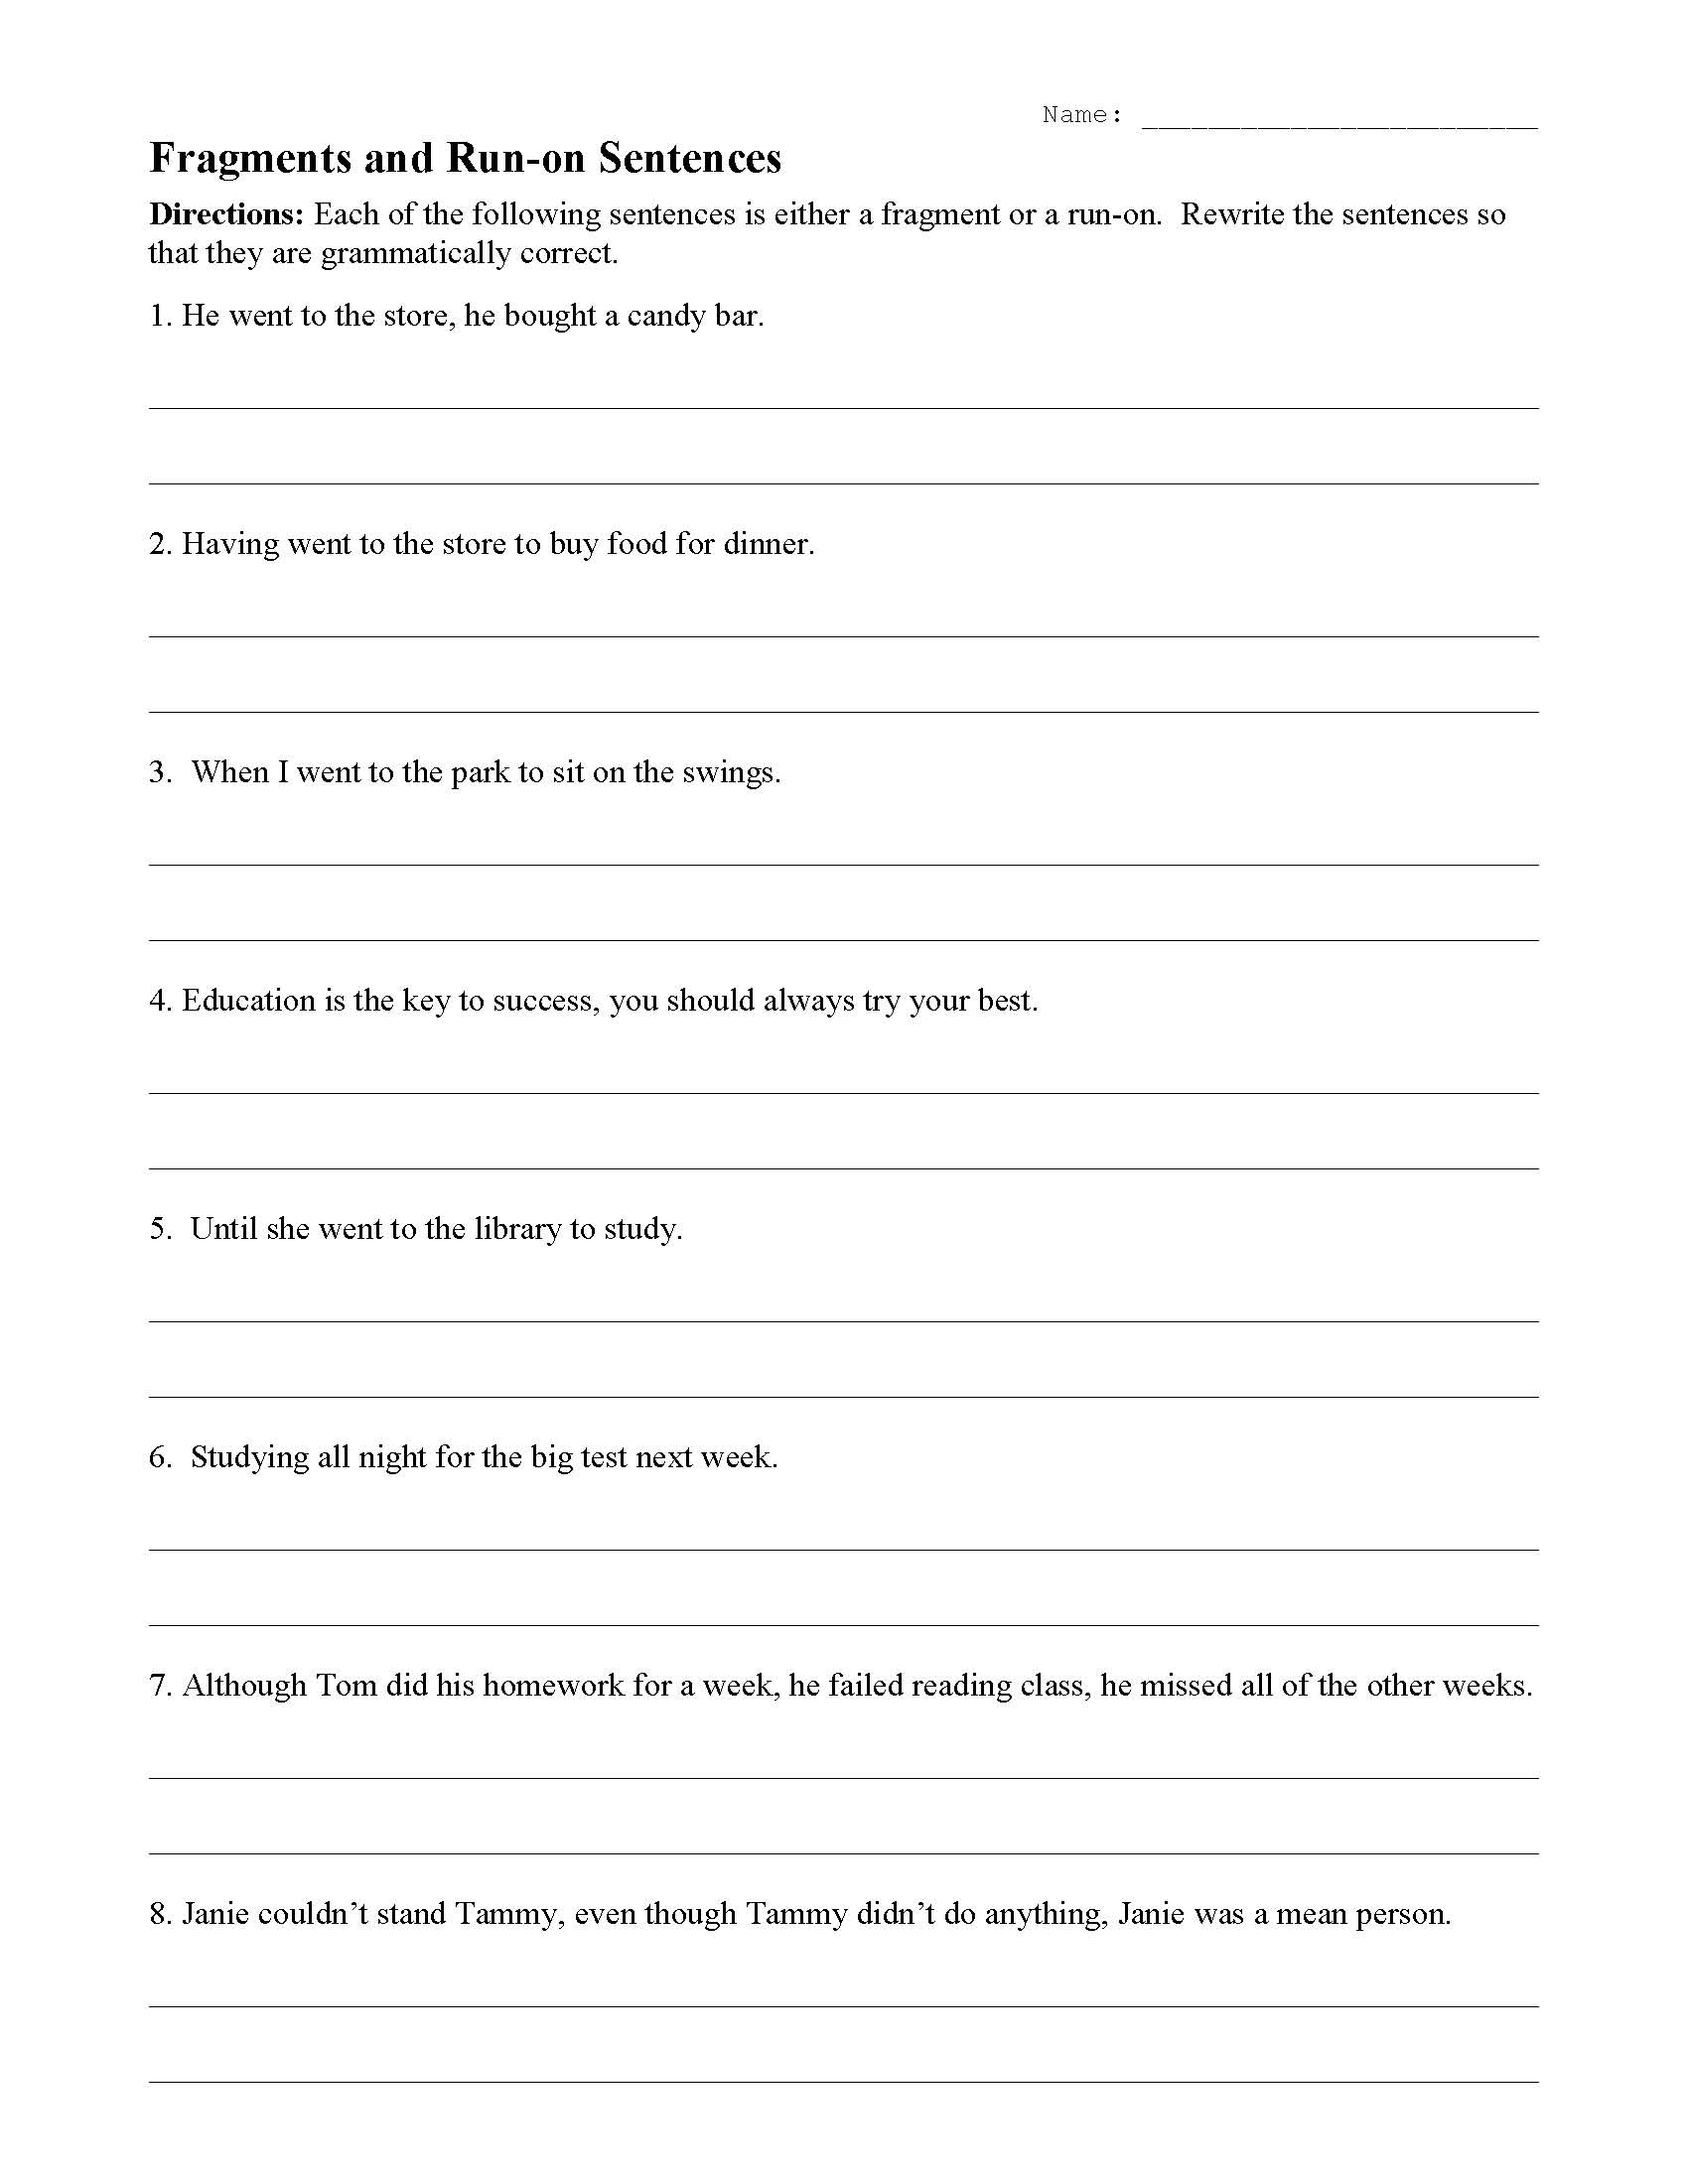 Fragments and Run-On Sentences Worksheet  Sentence Structure Activity For Run On Sentences Worksheet